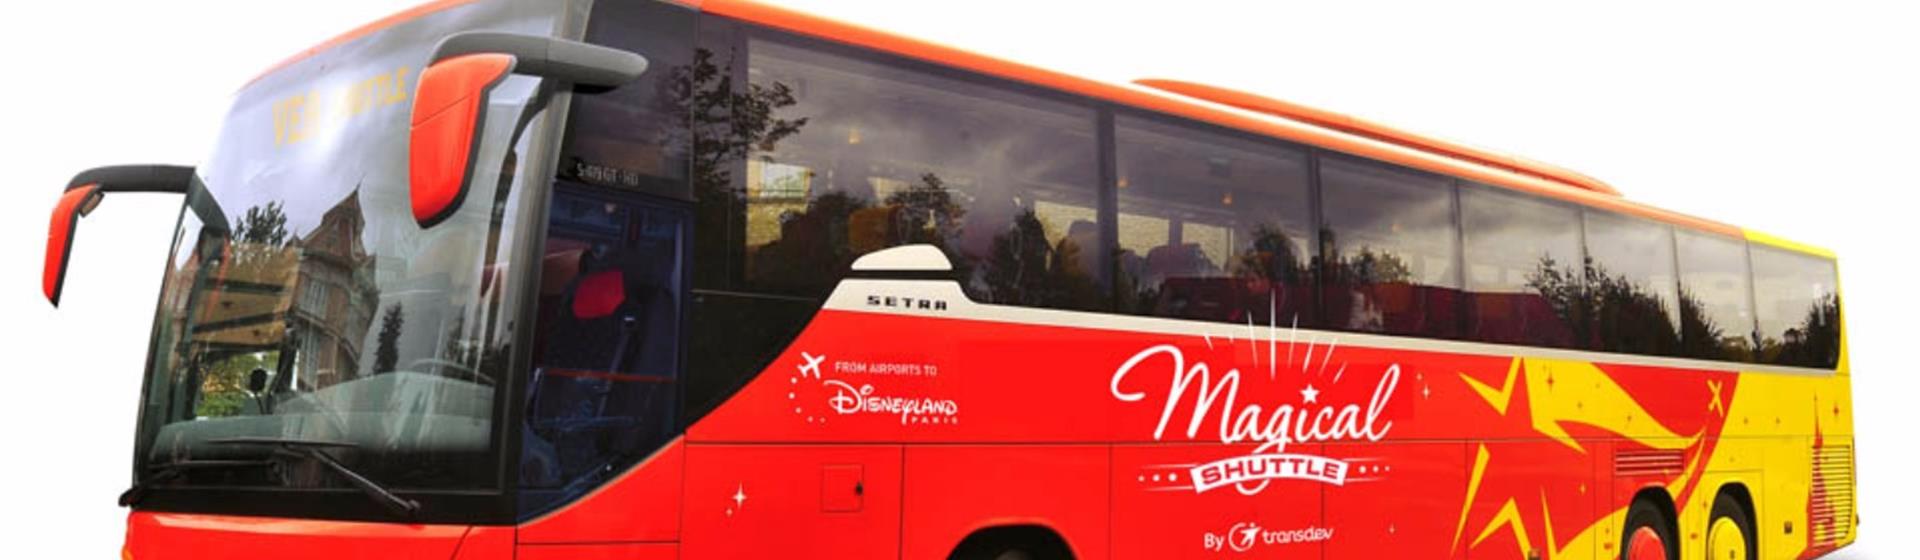 Magical Shuttle Transfers to Disneyland Paris